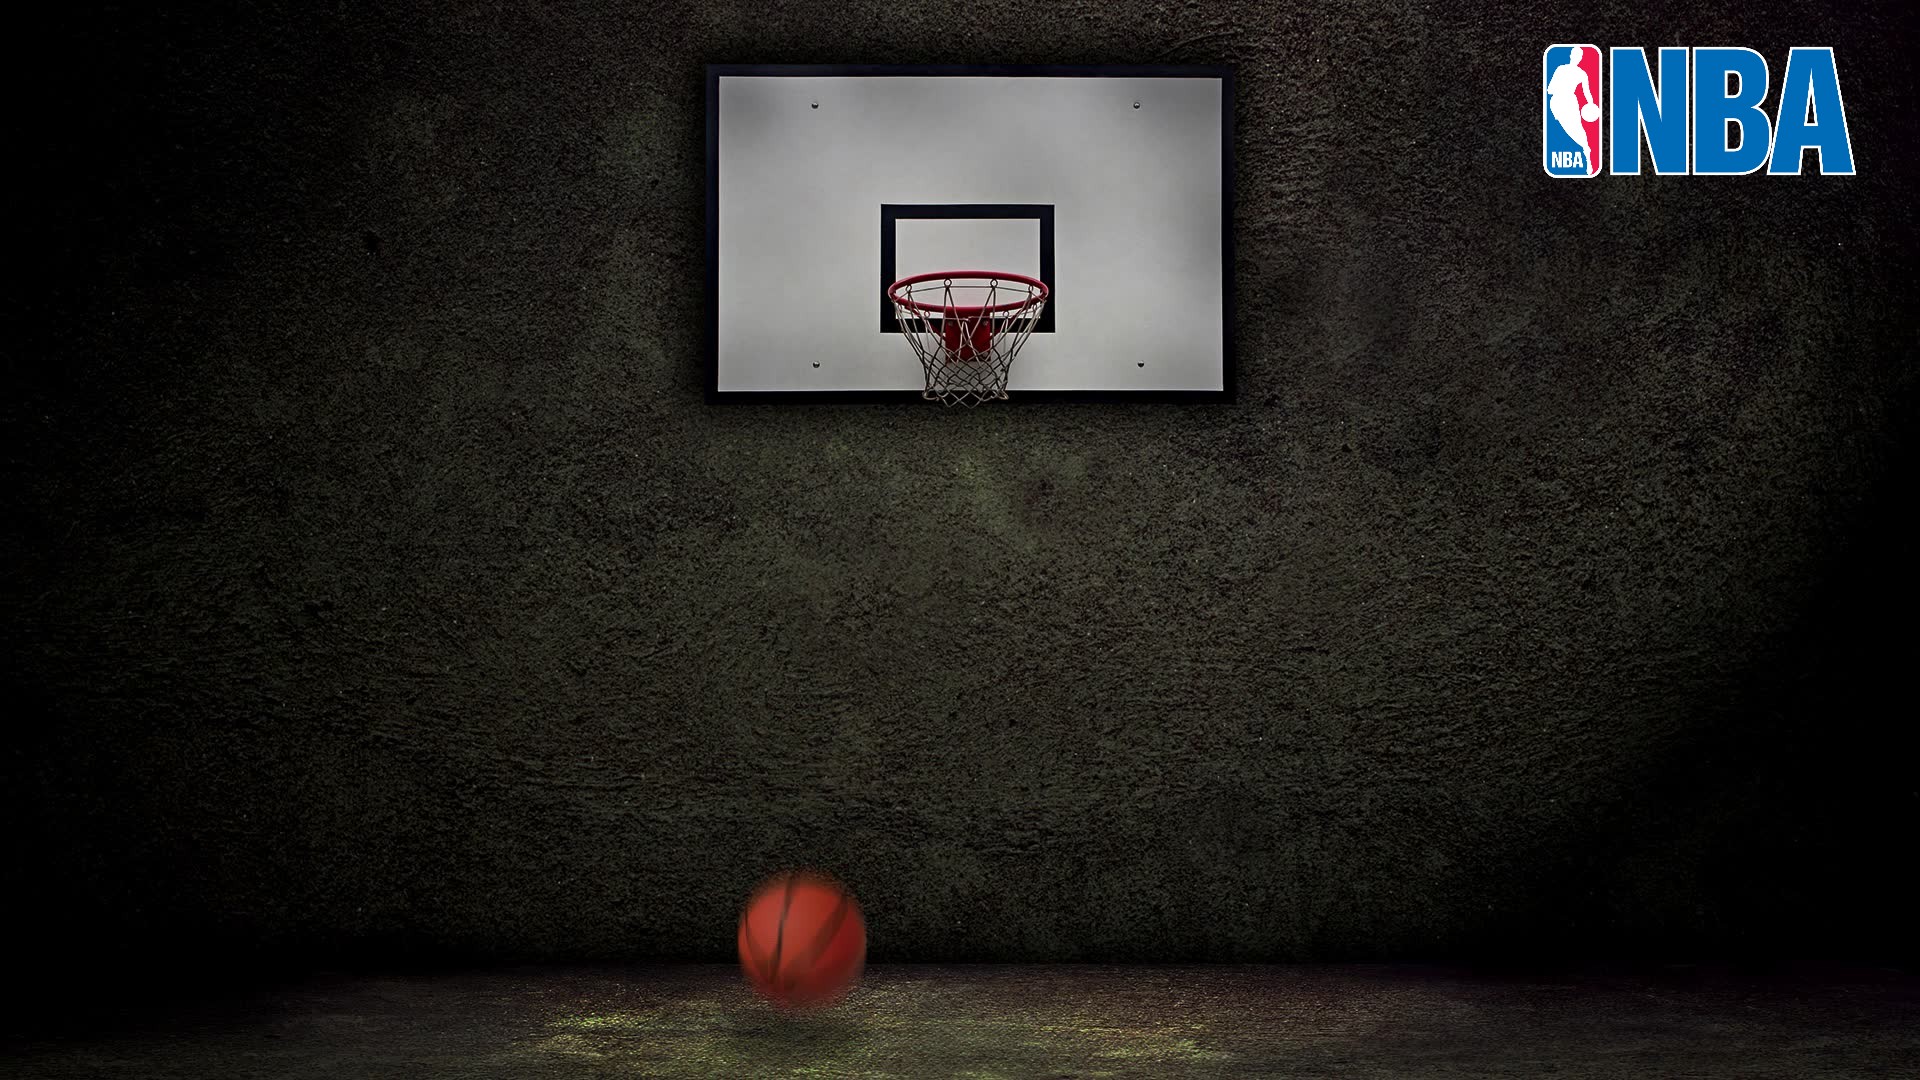 Basketball Court Wallpaper For Mac Backgrounds With - Hd Basketball Background For Mac - HD Wallpaper 